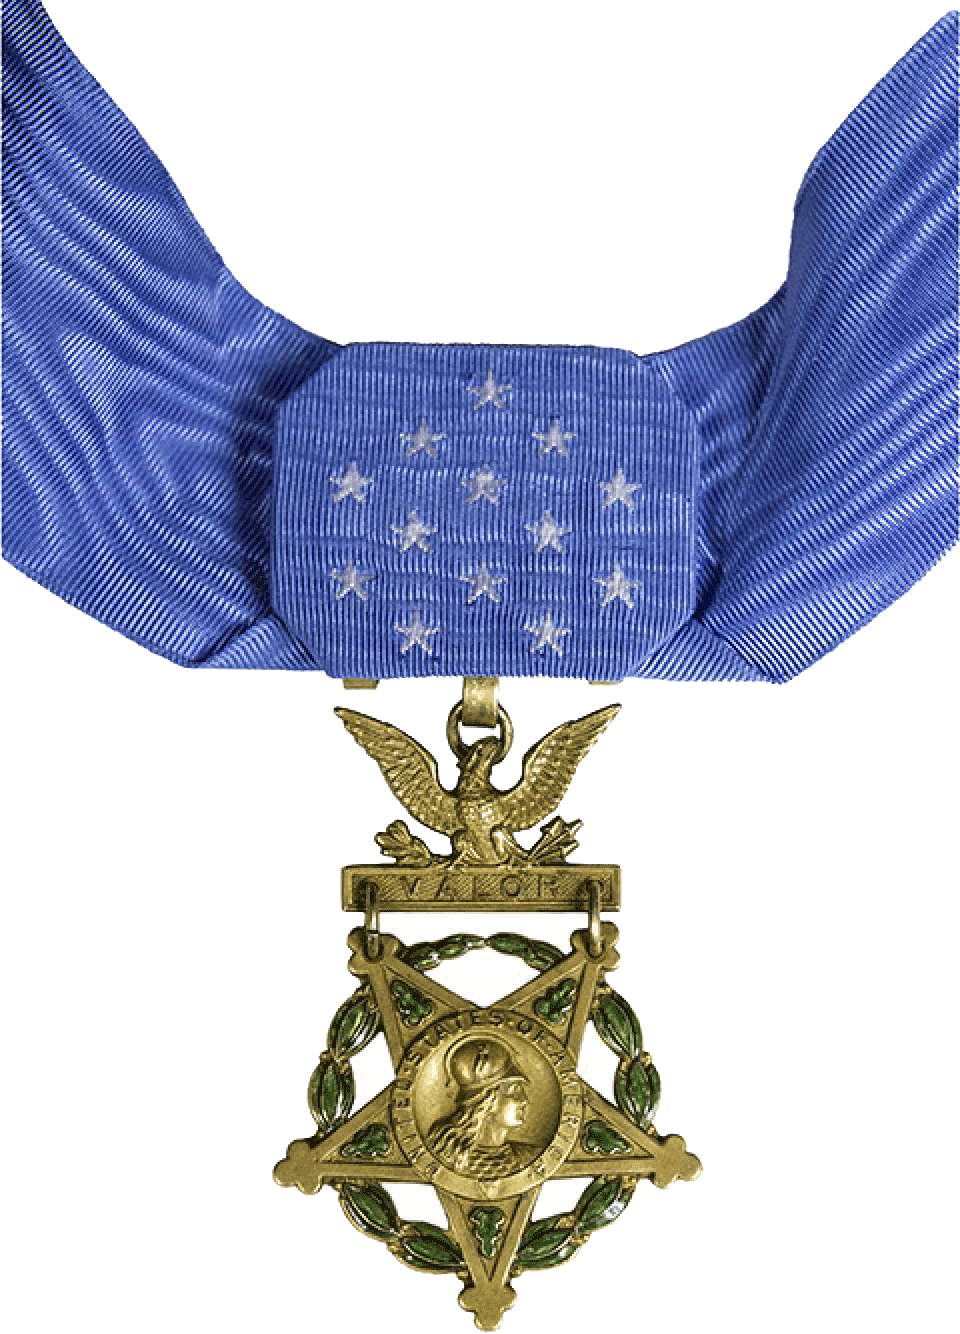 Medal of Honir on blue ribbon.